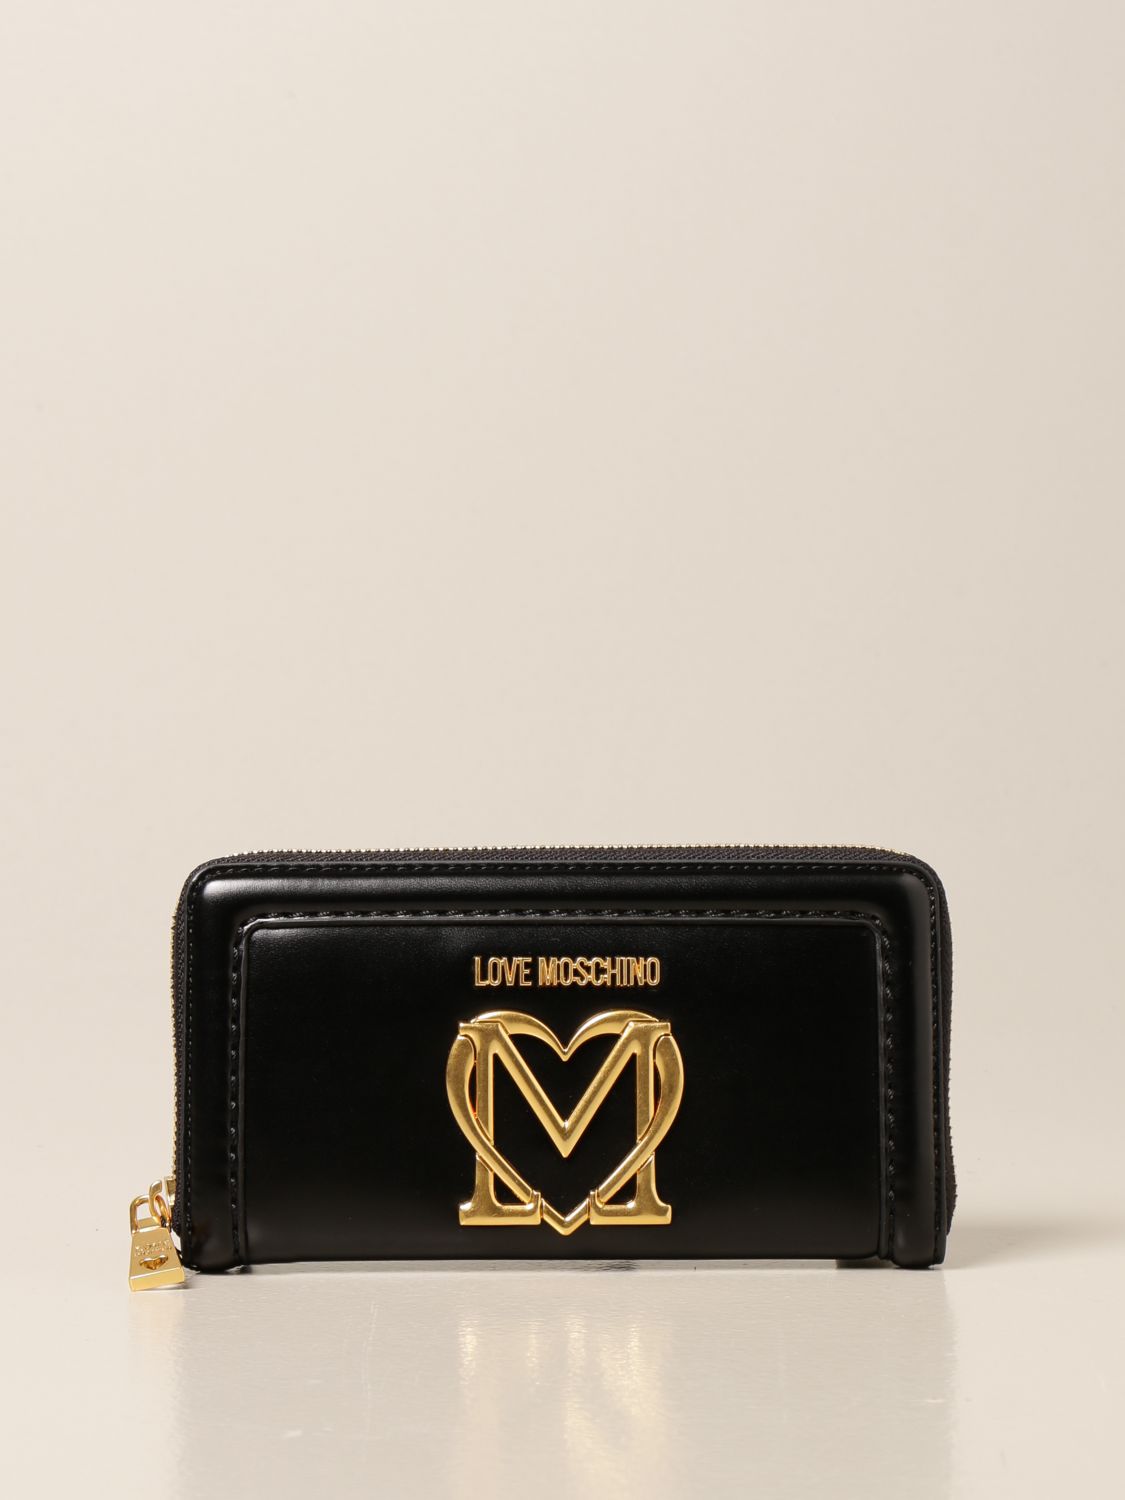 love moschino women's wallets